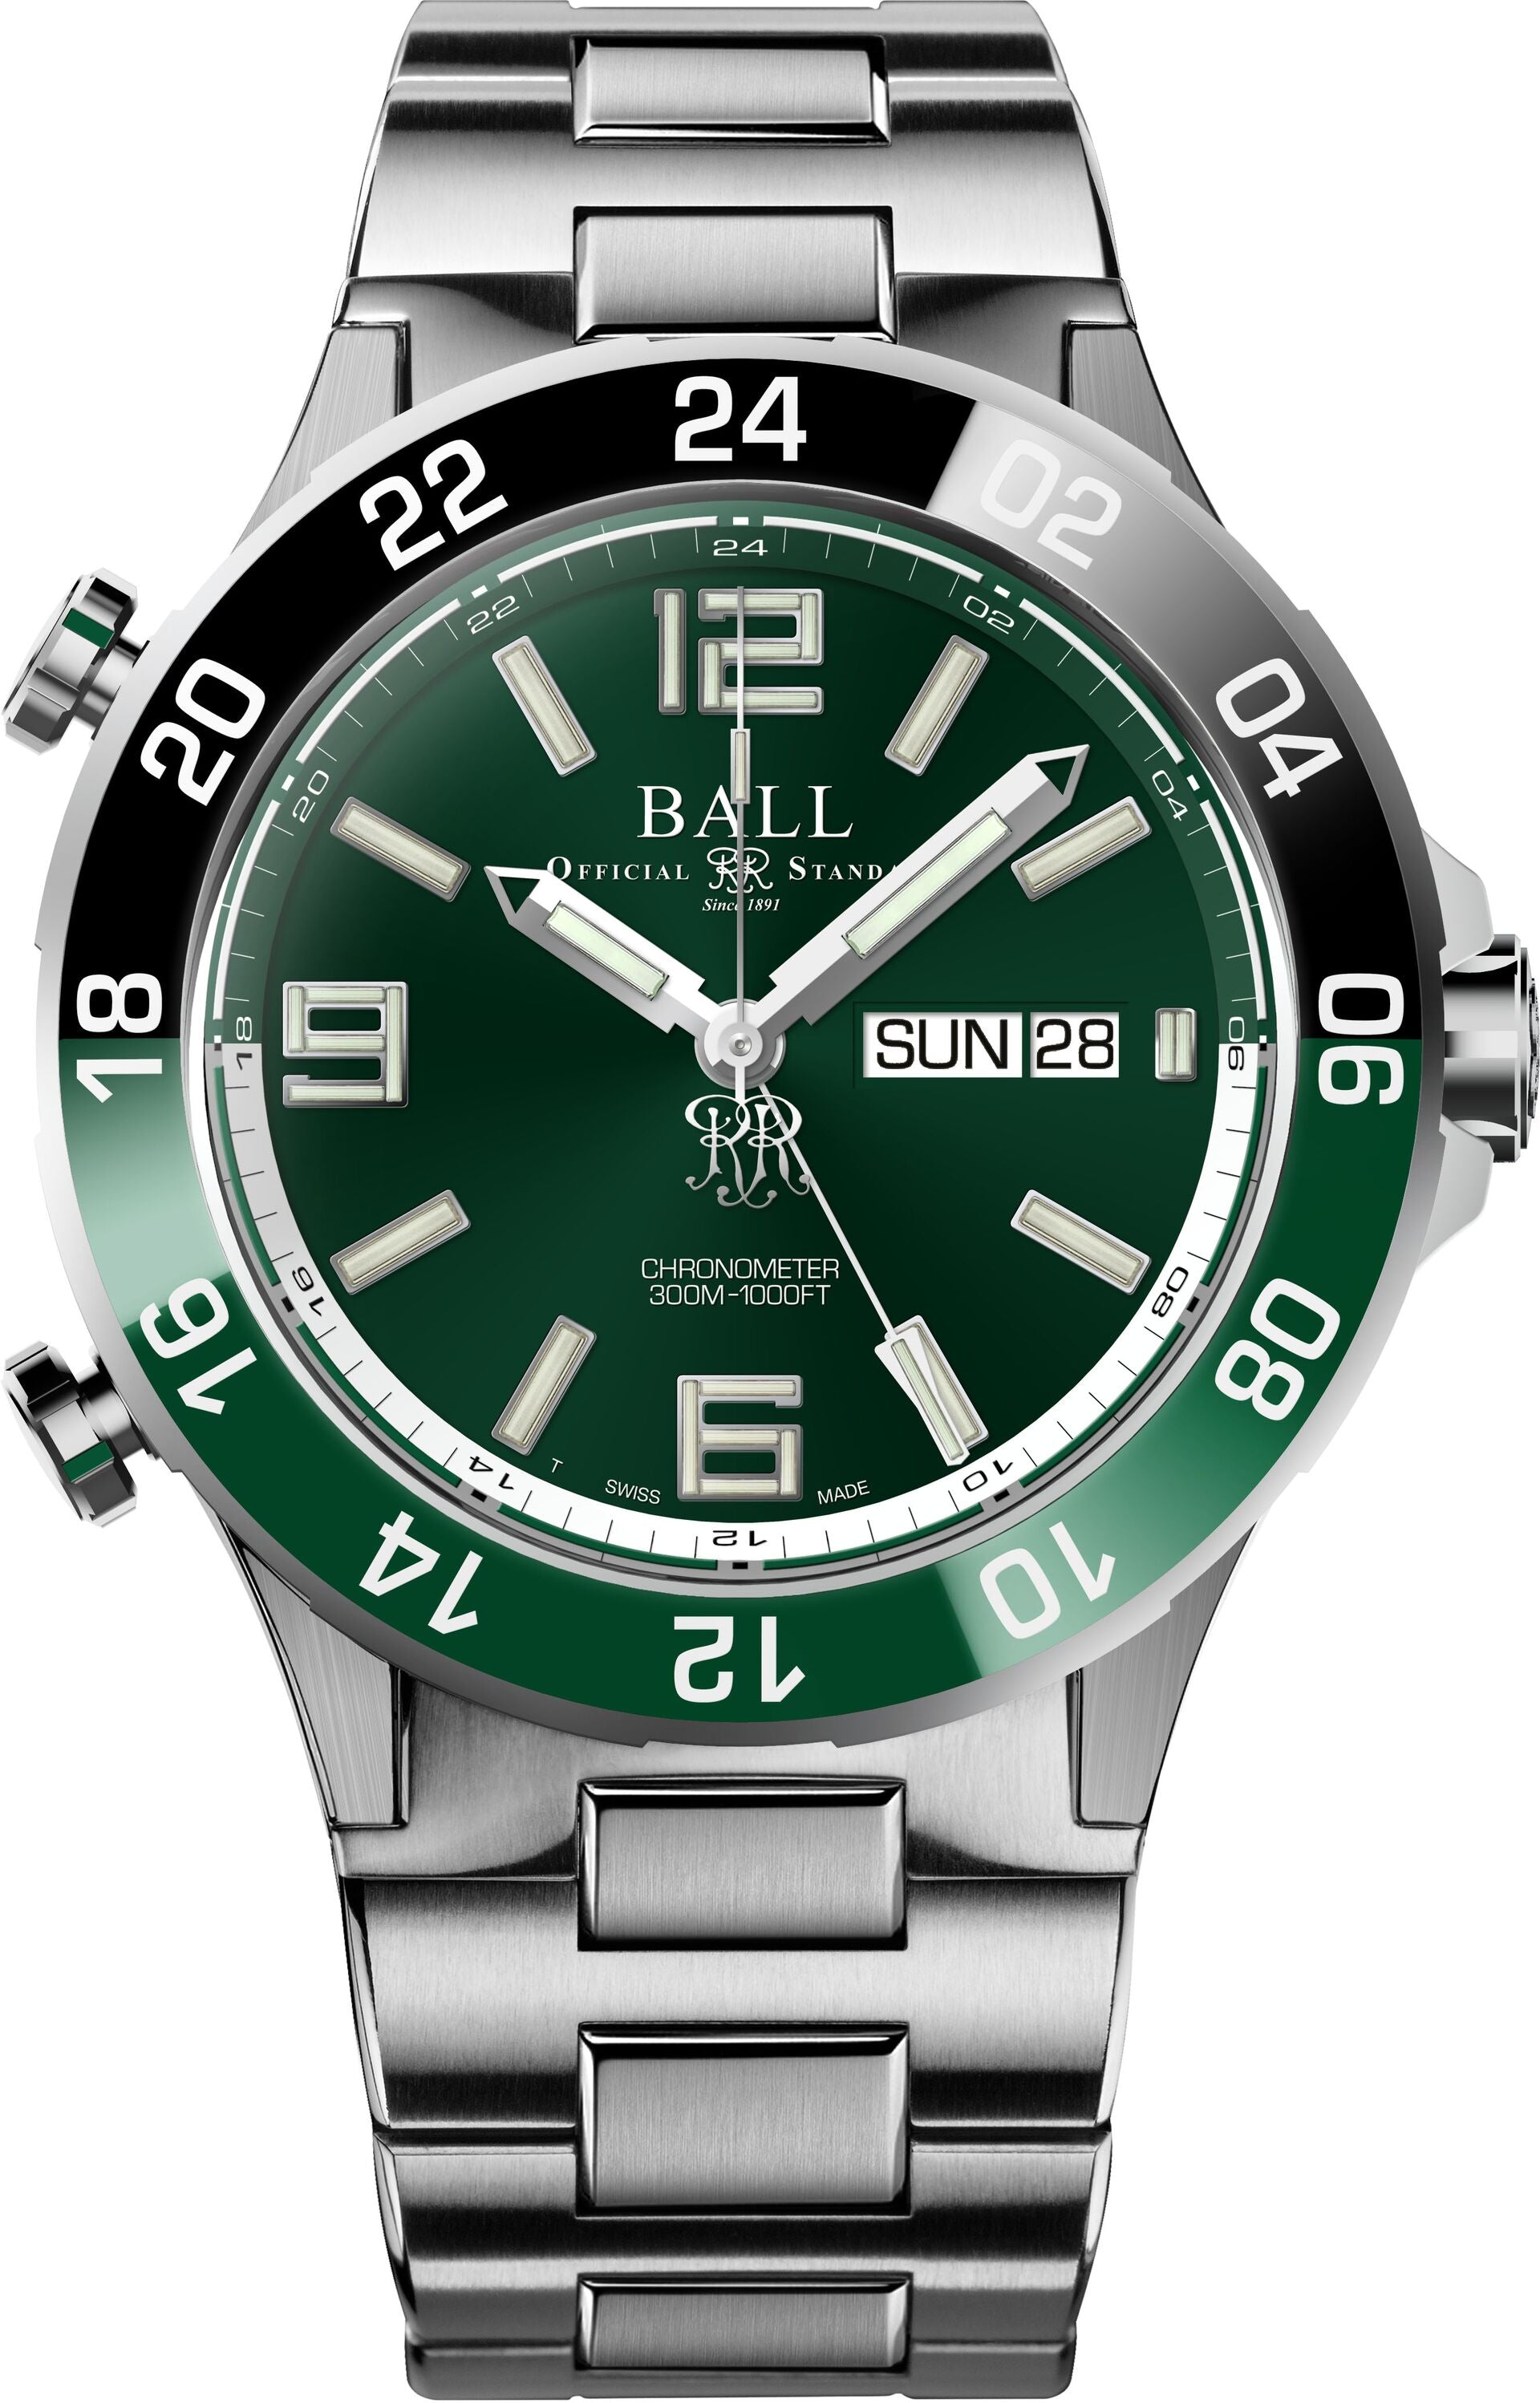 Photos - Wrist Watch Ball Watch Company Roadmaster Marine GMT Limited Edition Pre-Order BL-2620 